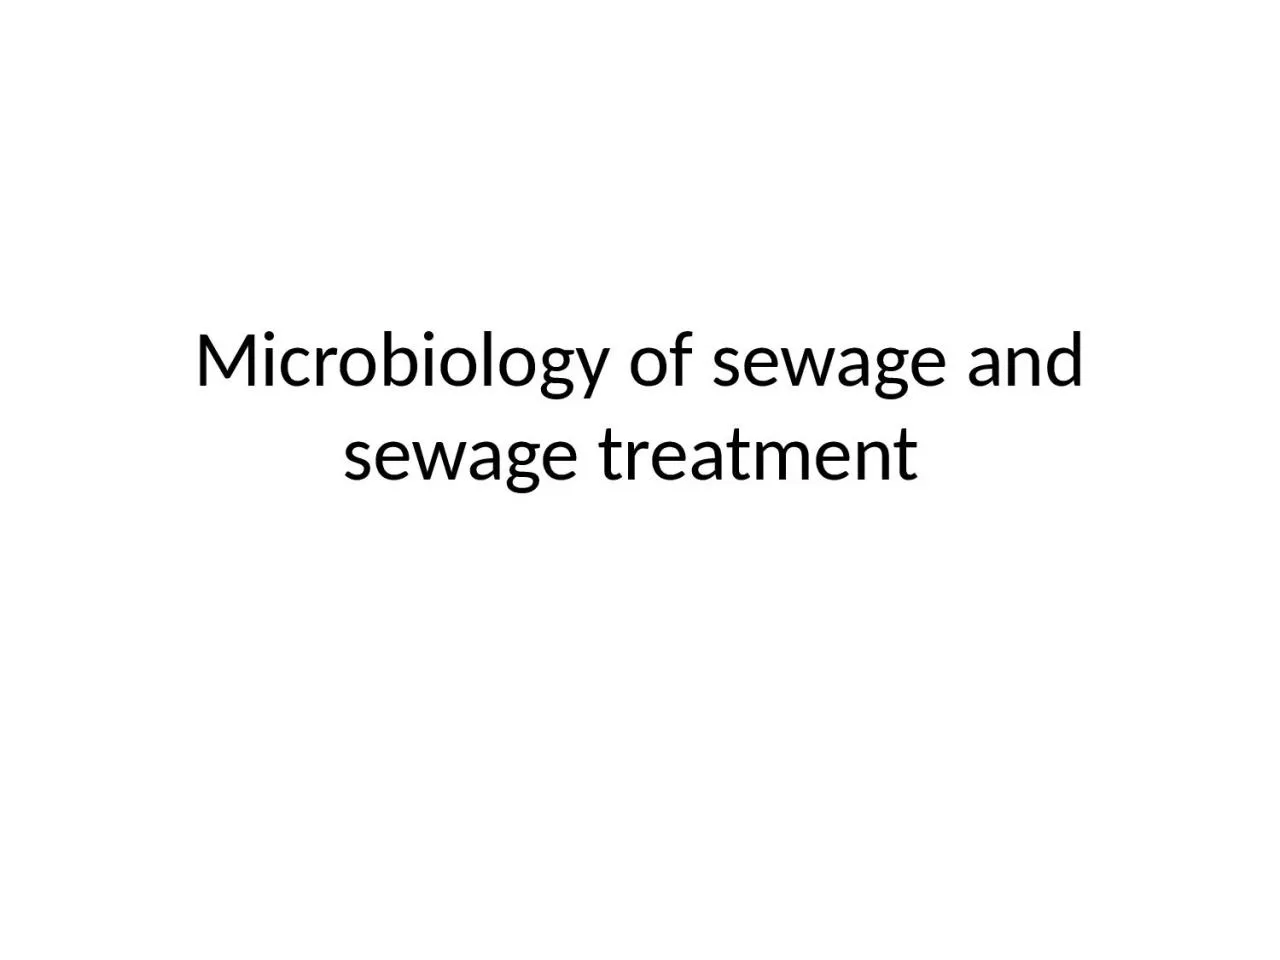 Microbiology of sewage and sewage treatment